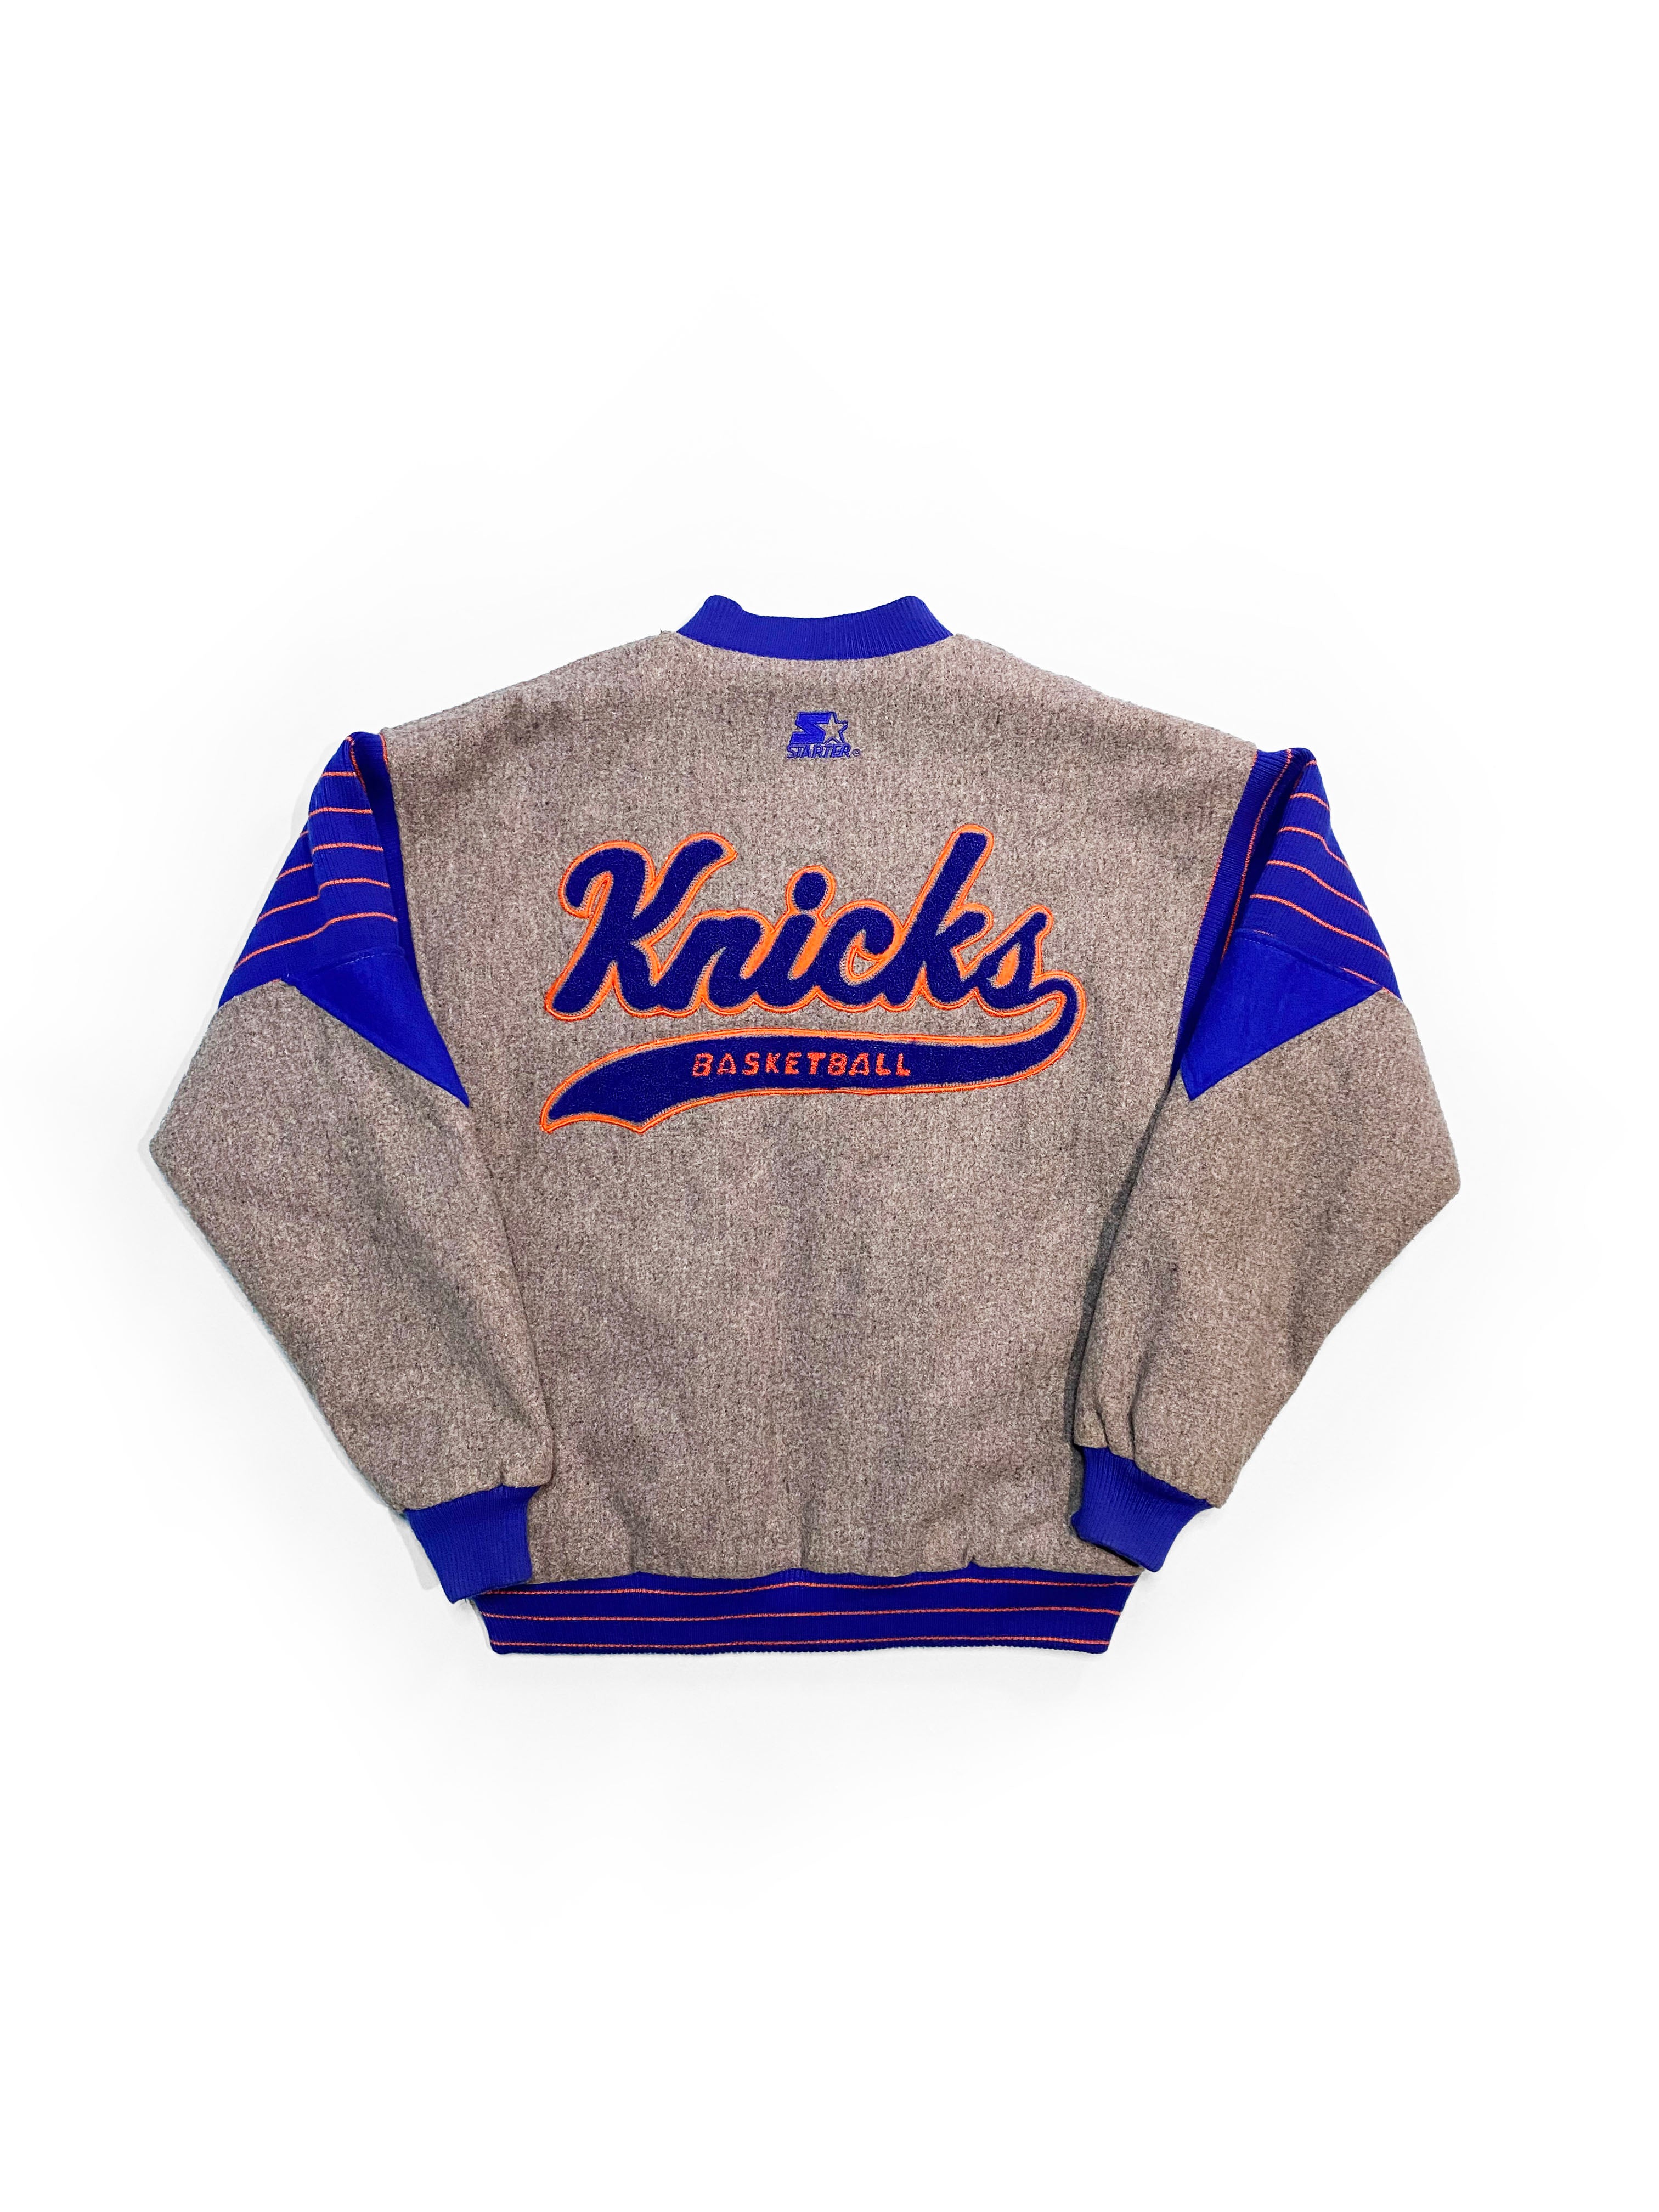 New York Basketball Vintage Knicks Sweatshirt